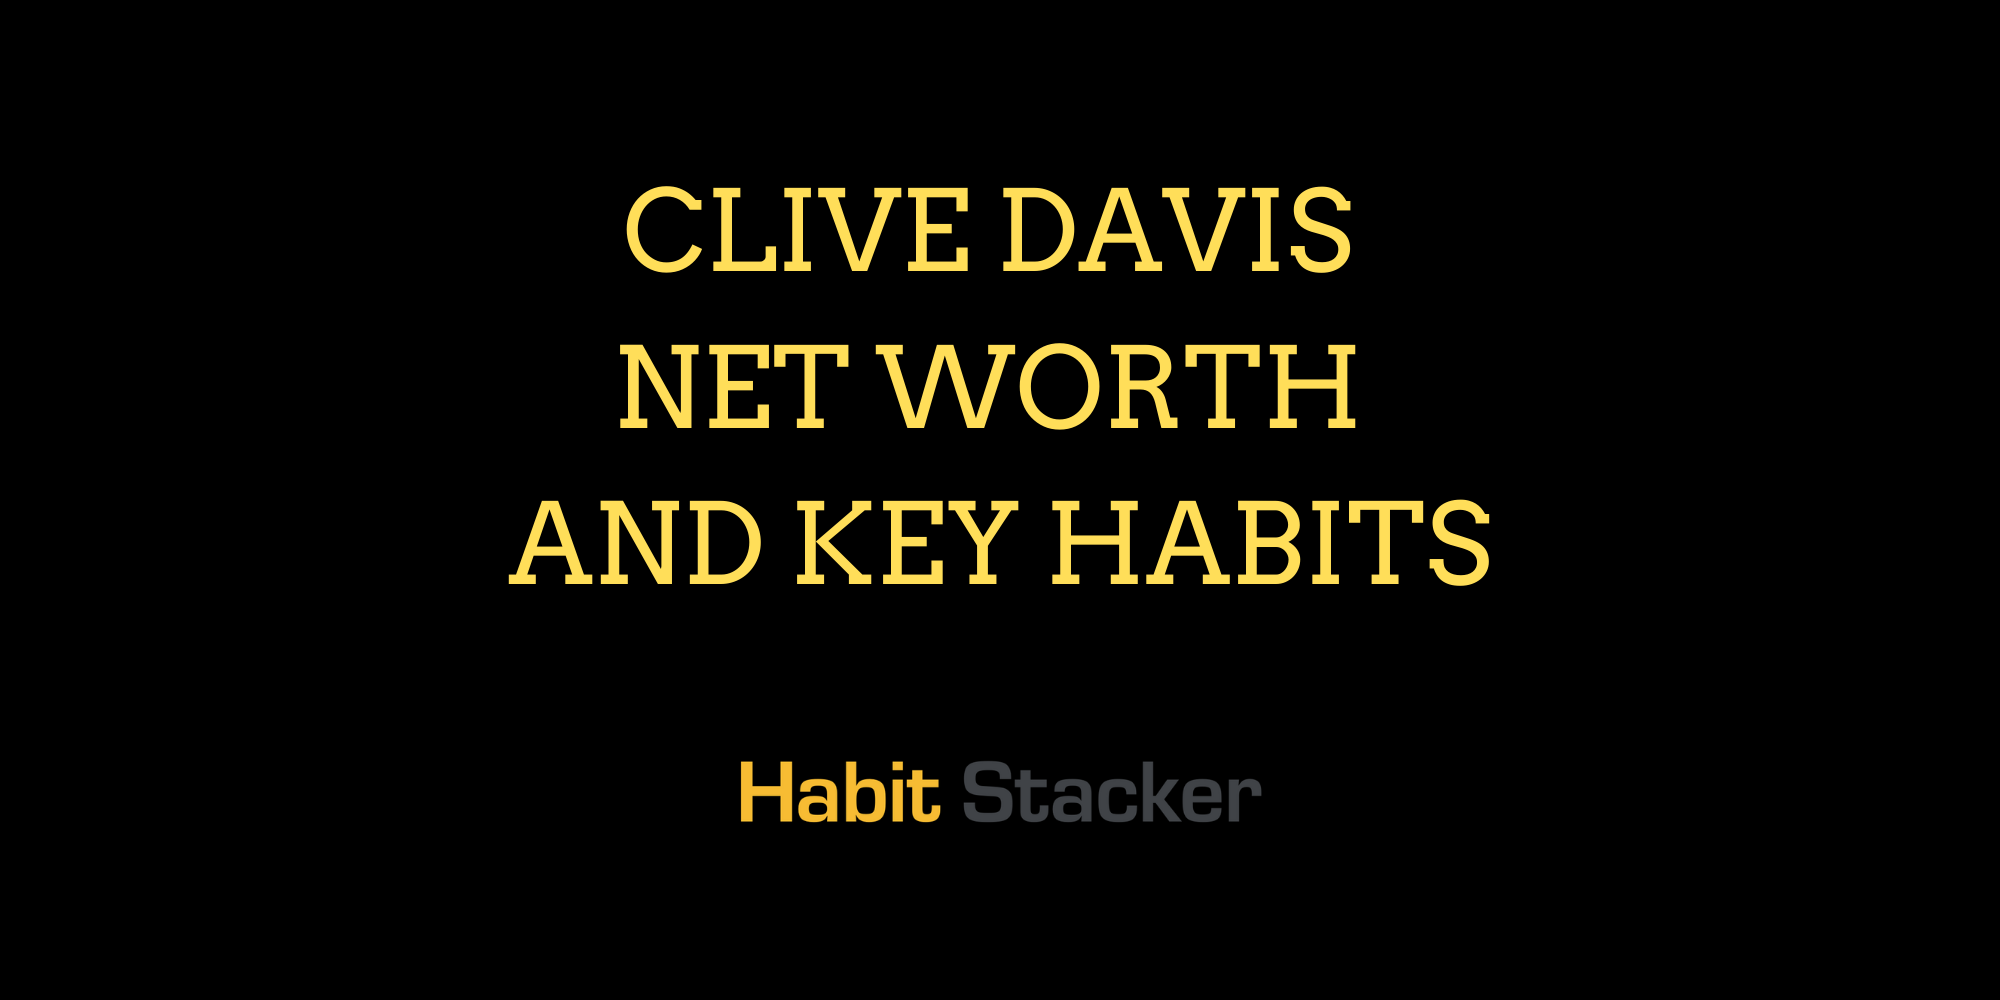 Clive Davis Net Worth and Key Habits